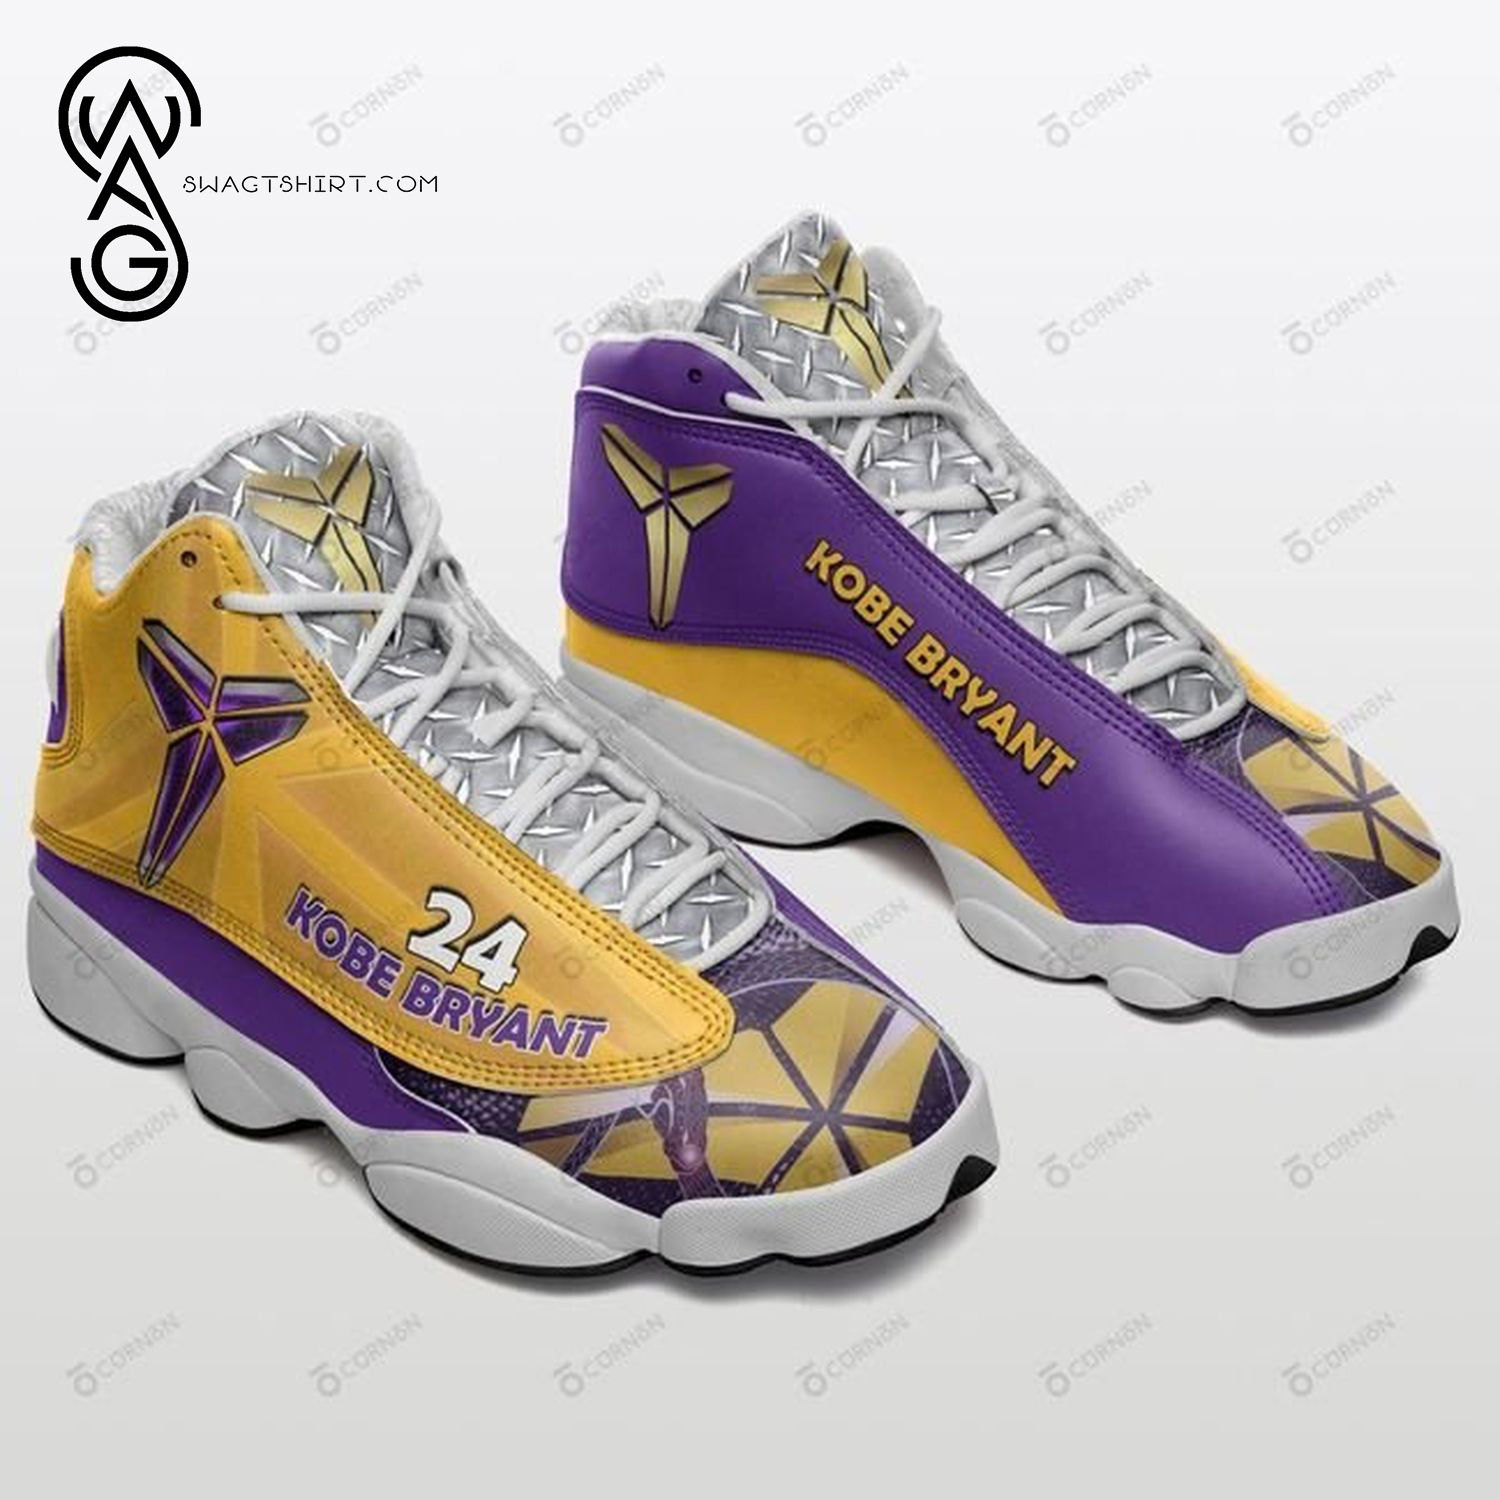 Kobe Bryant Basketball Player Air Jordan 13 Shoes